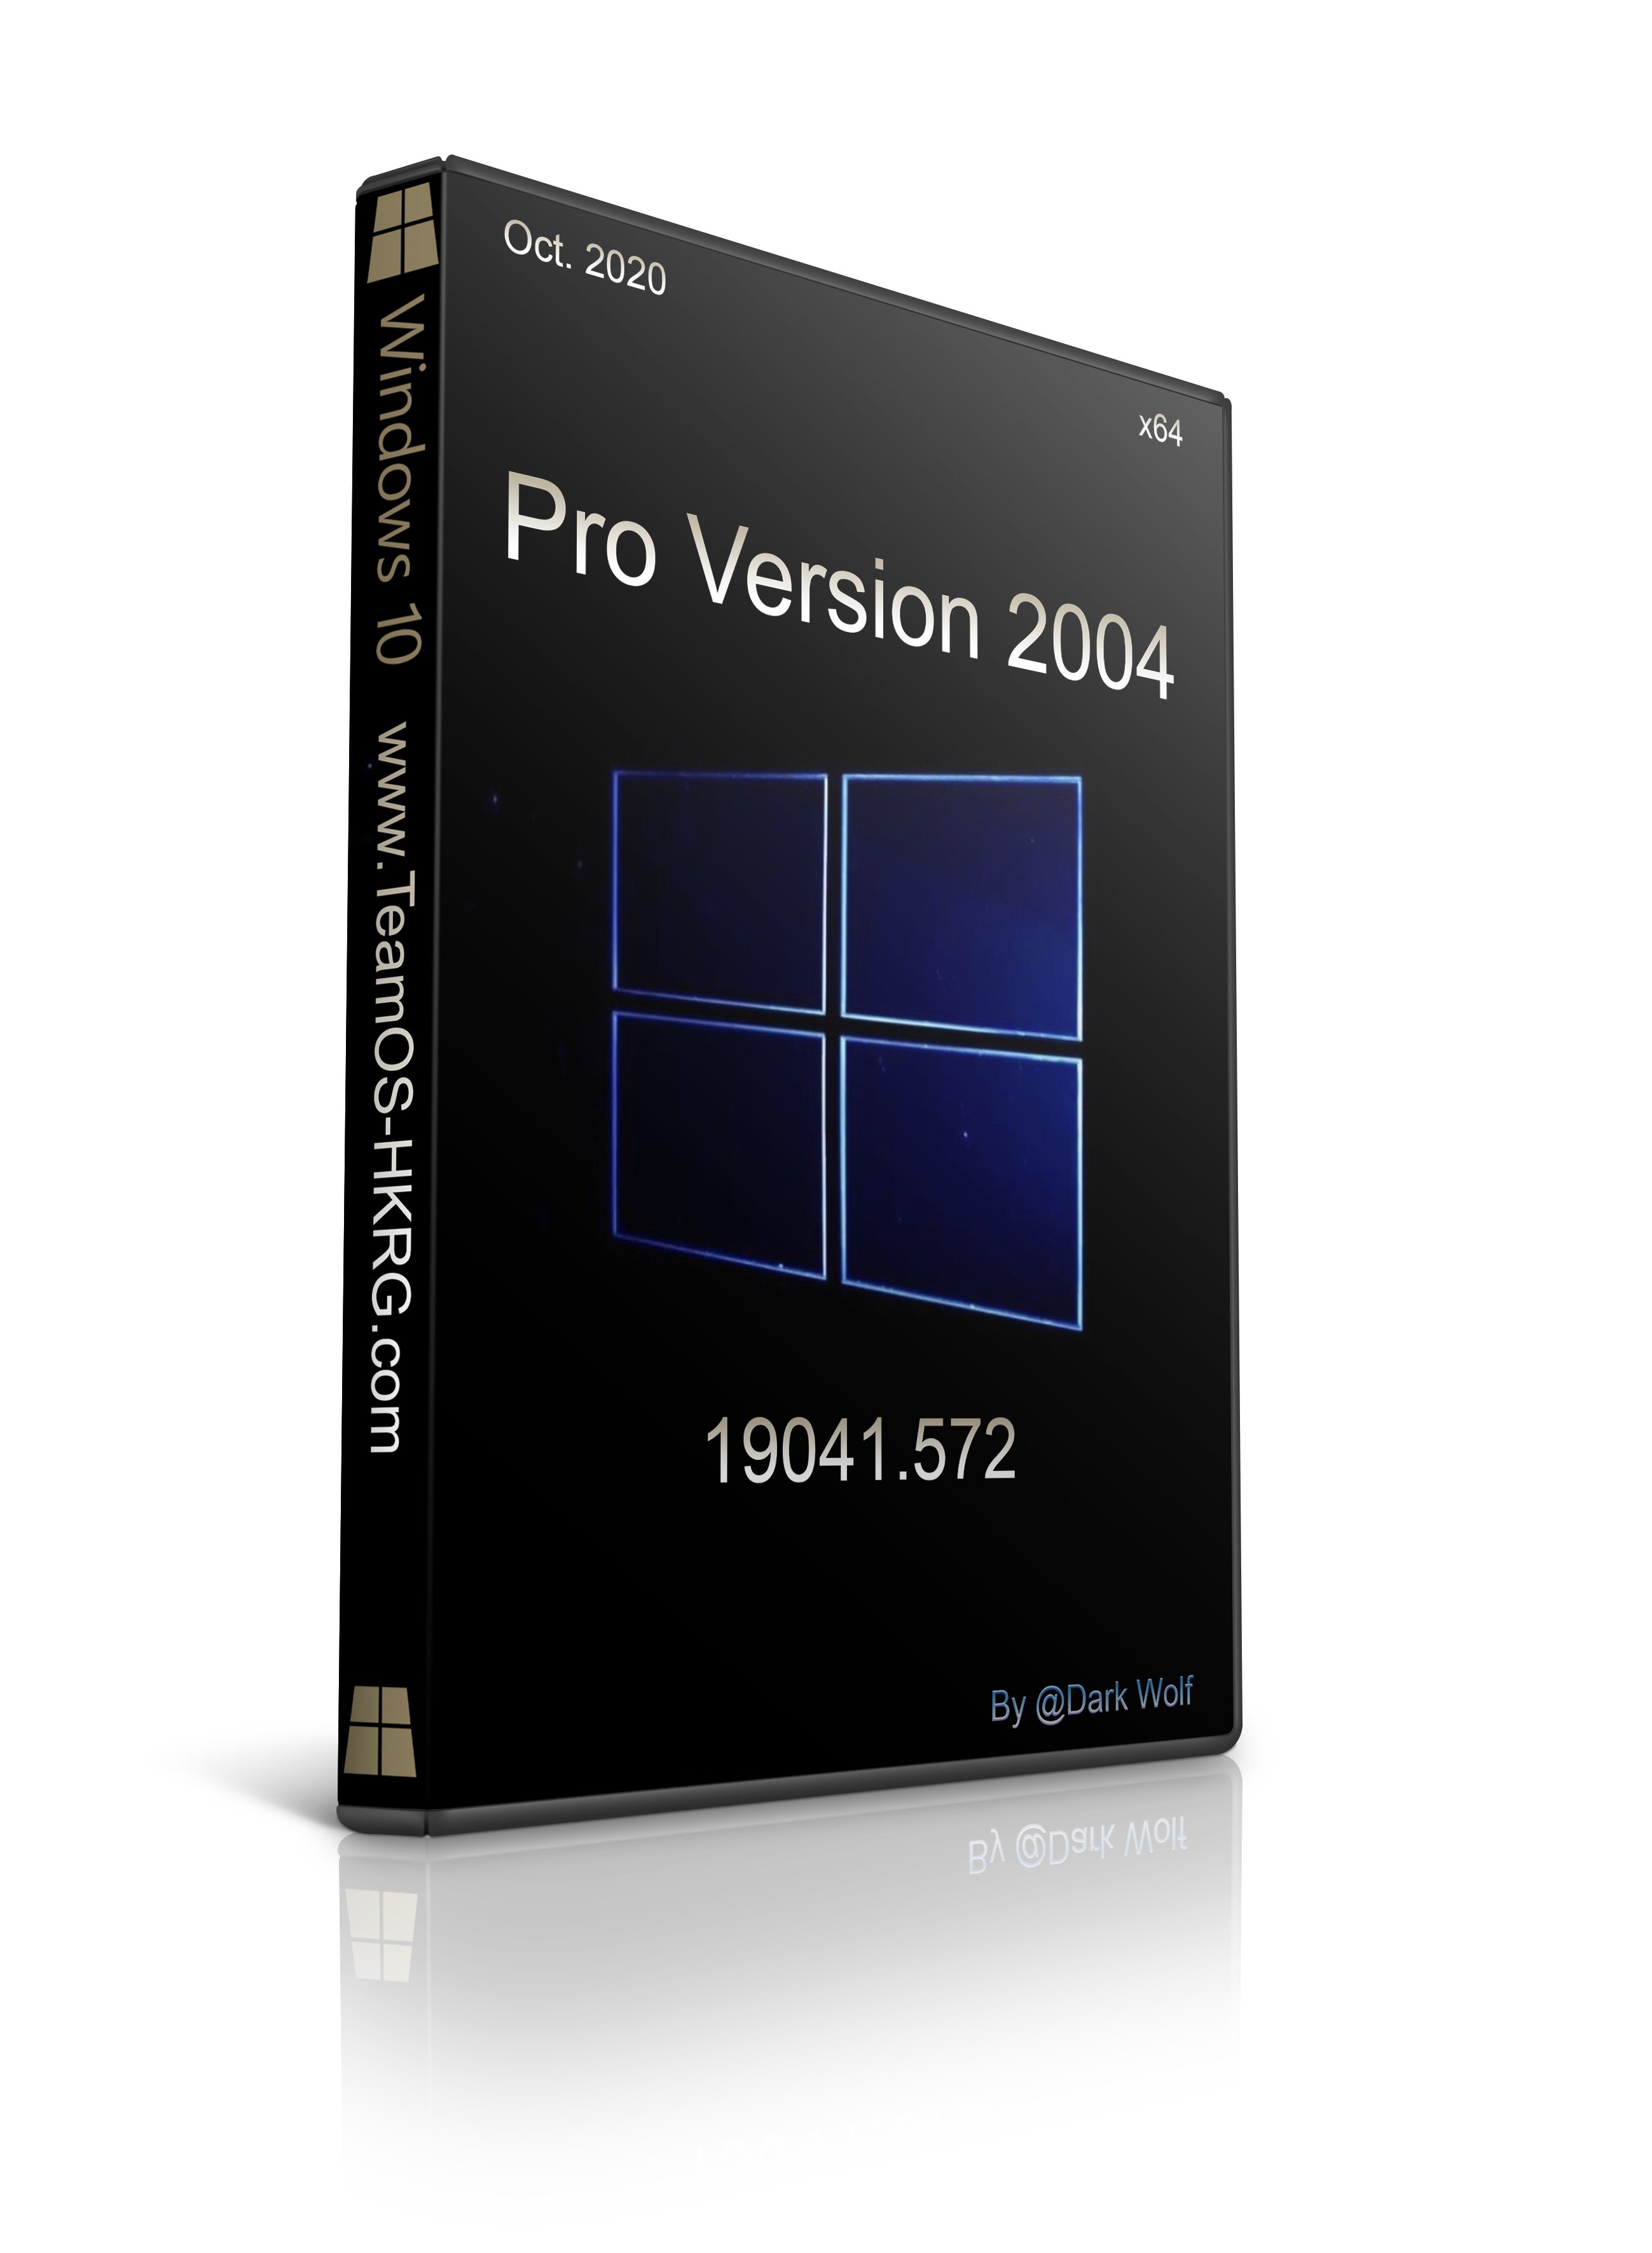 microsoft windows 10 pro 2004 download